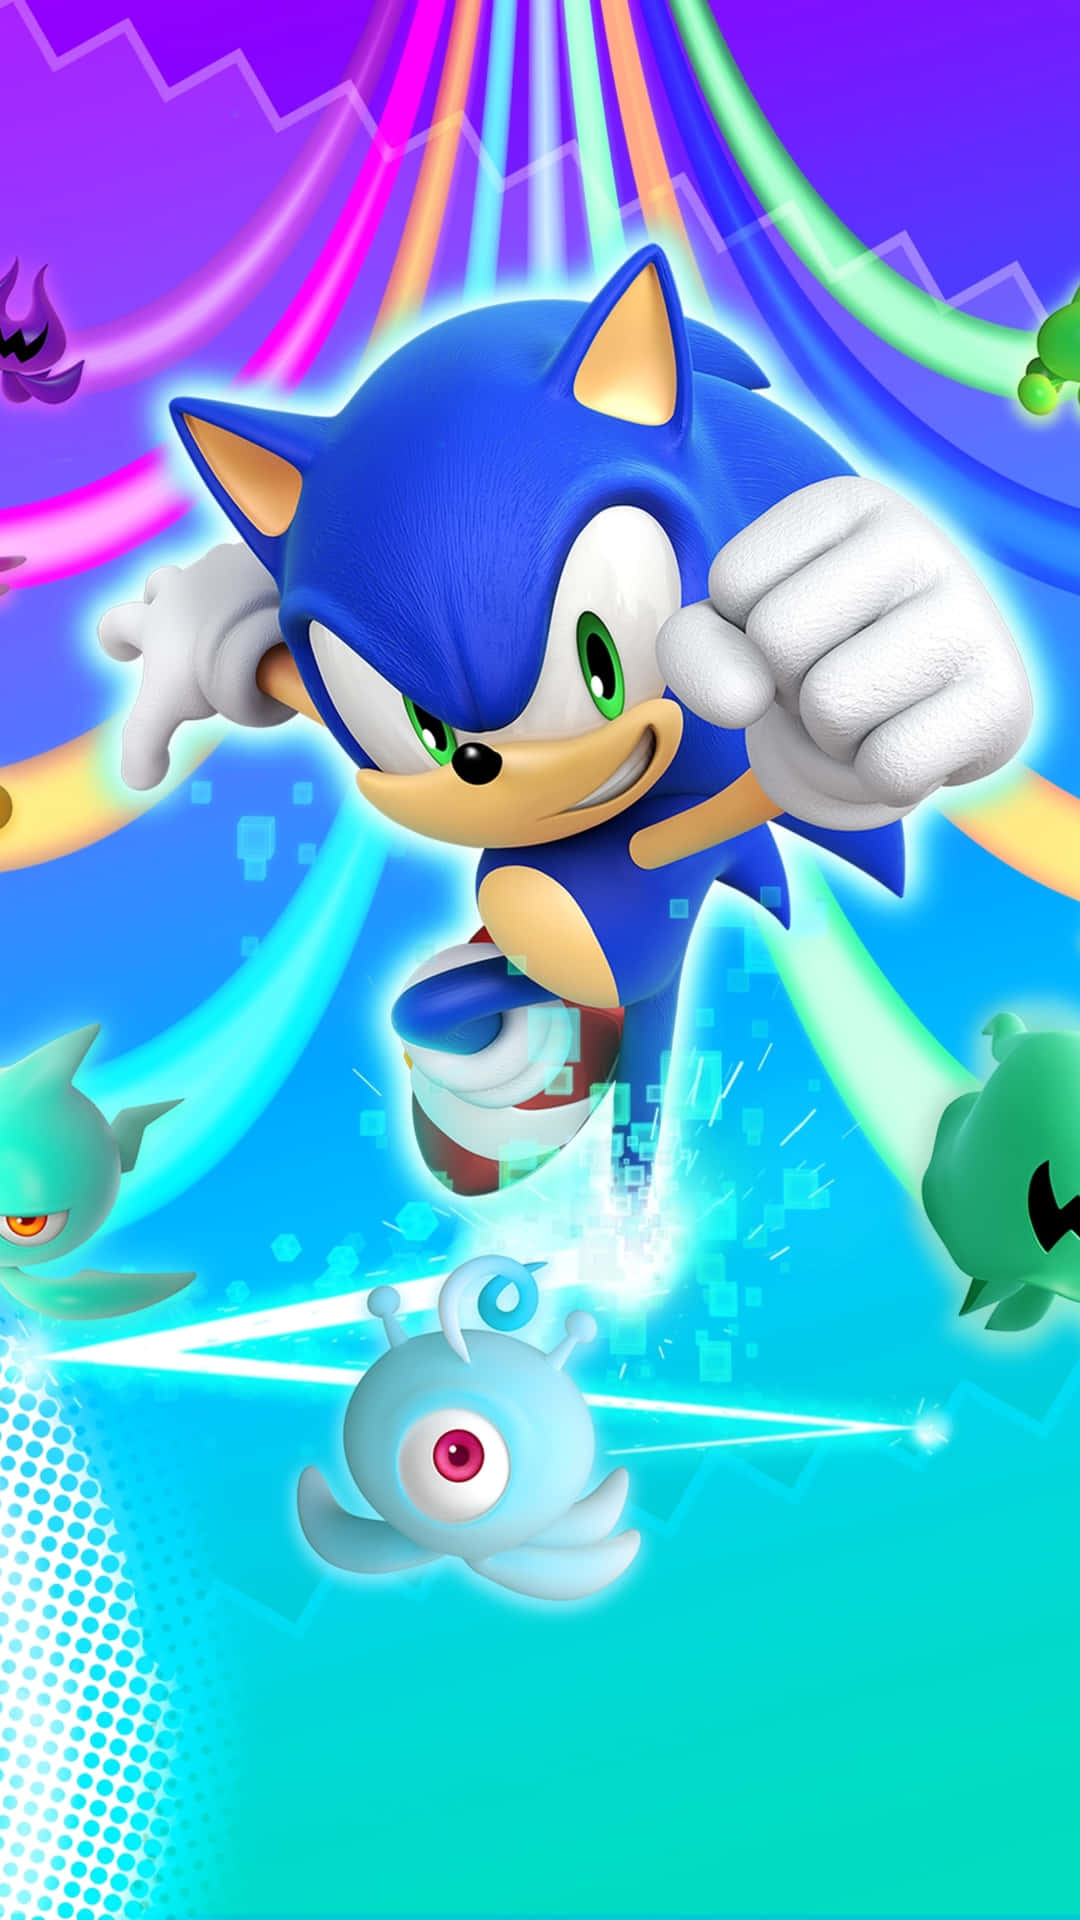 Classic Sonic Wallpaper: Speeding Through the Retro Zone Wallpaper